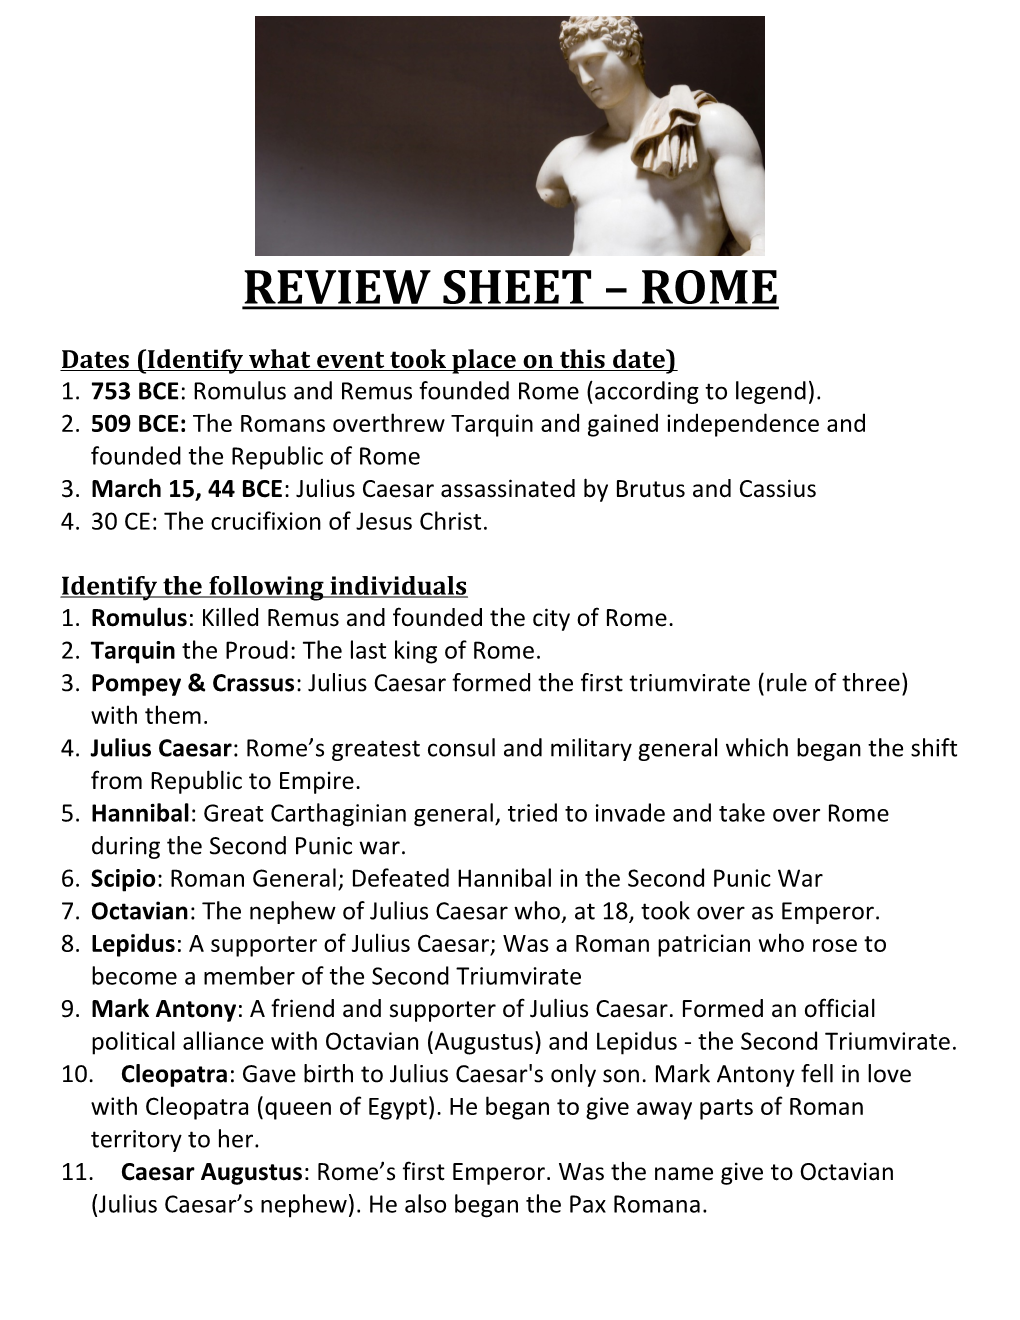 Review Sheet Rome